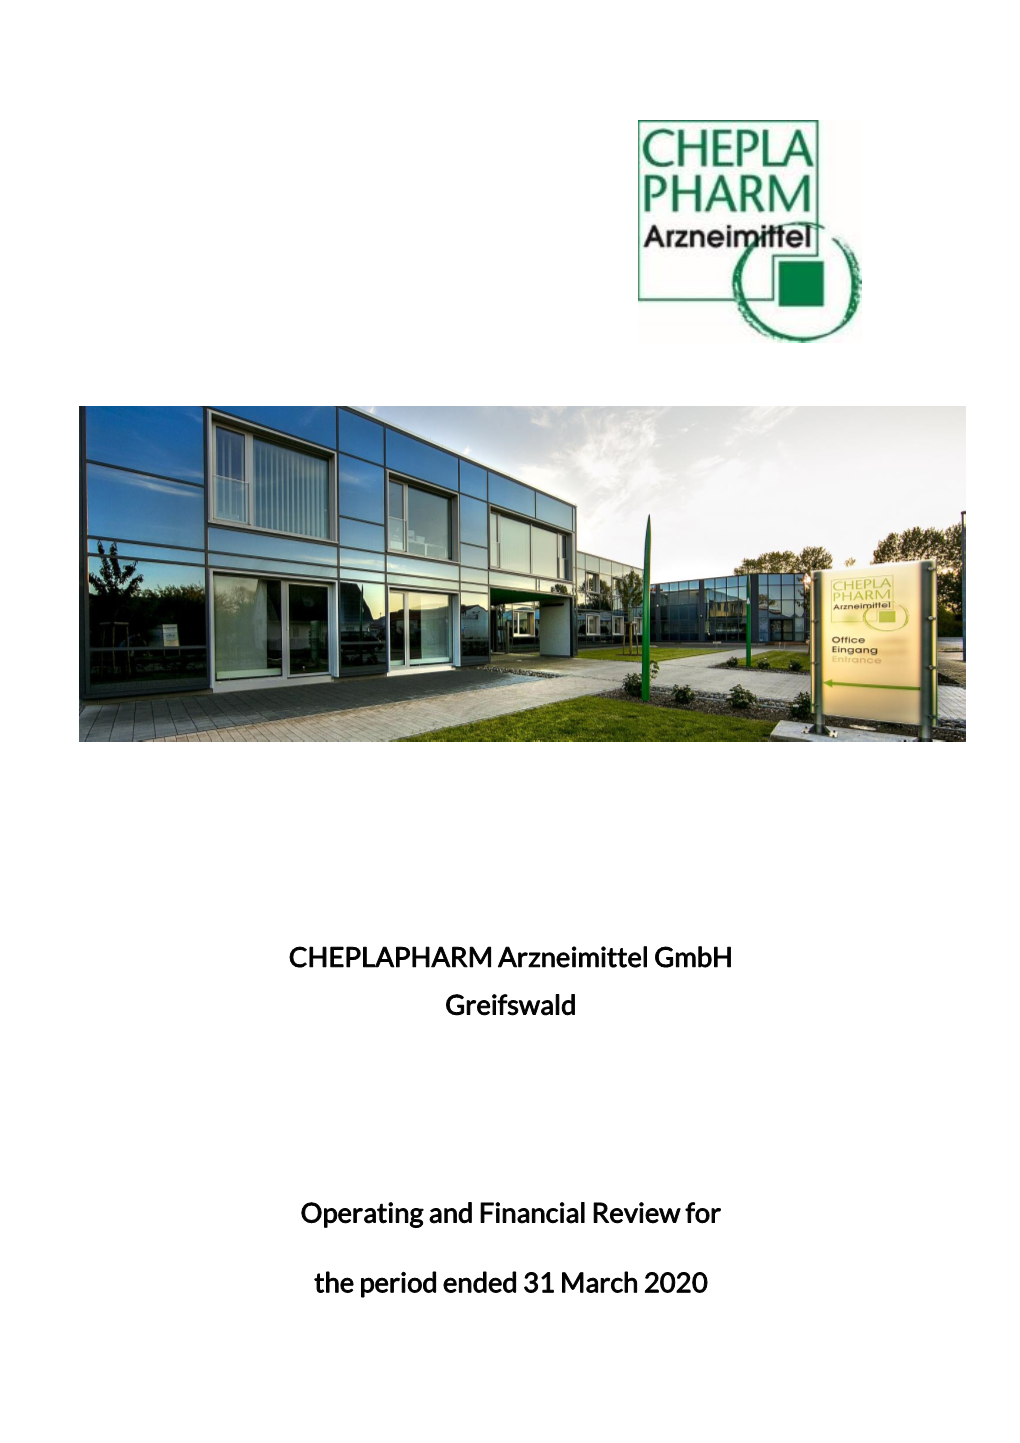 CHEPLAPHARM Arzneimittel Gmbh Greifswald Operating and Financial